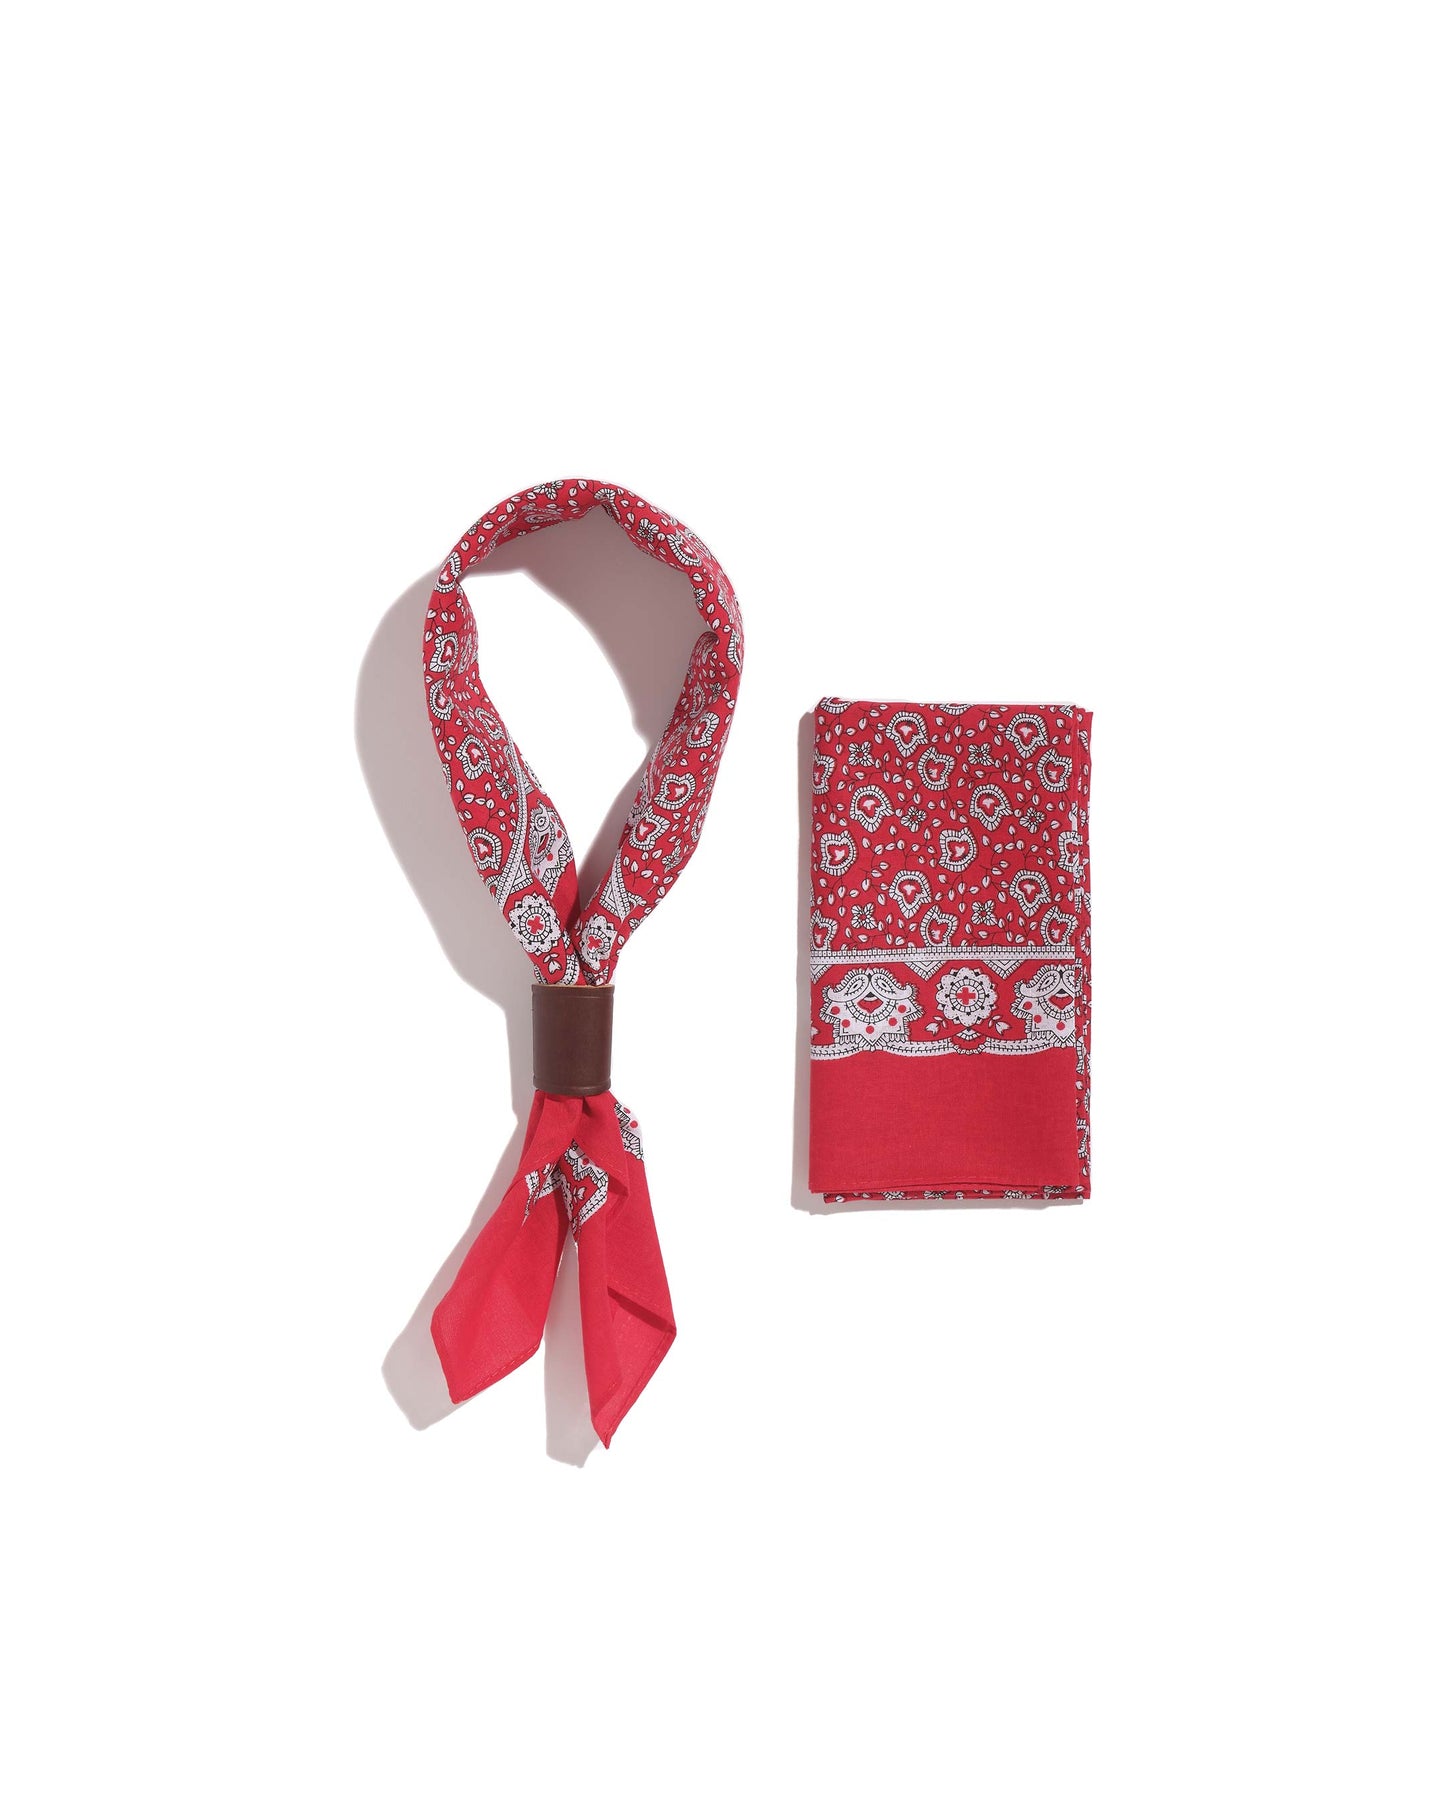 Traditional 100% cotton red bandana